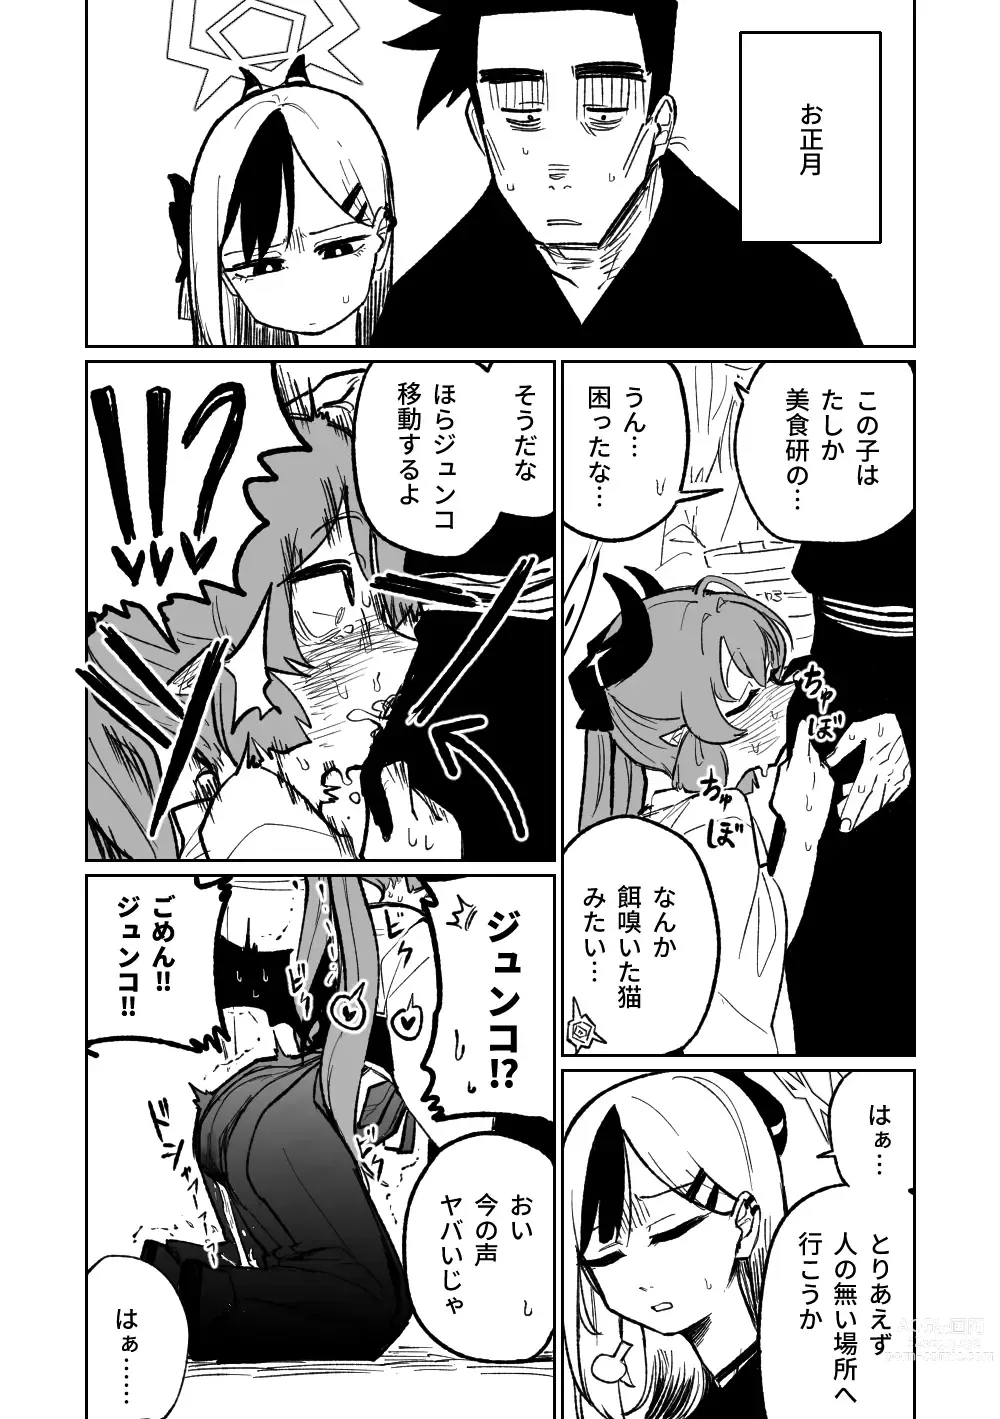 Page 6 of doujinshi Hungry Junko